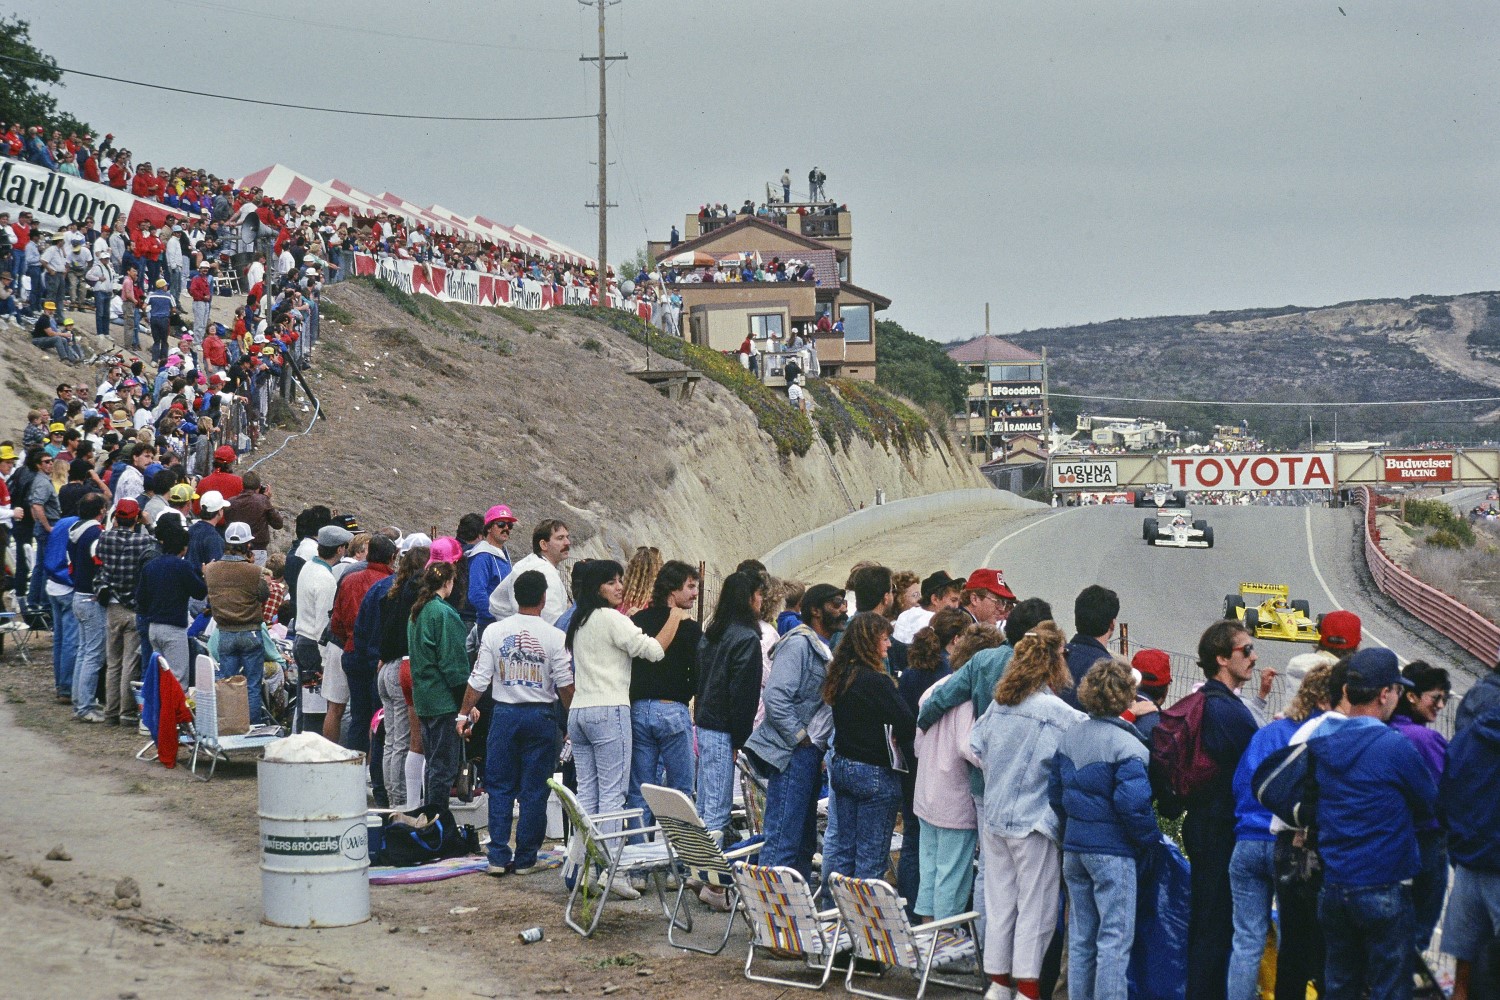 1996 CART IndyCar Race at Laguna Seca